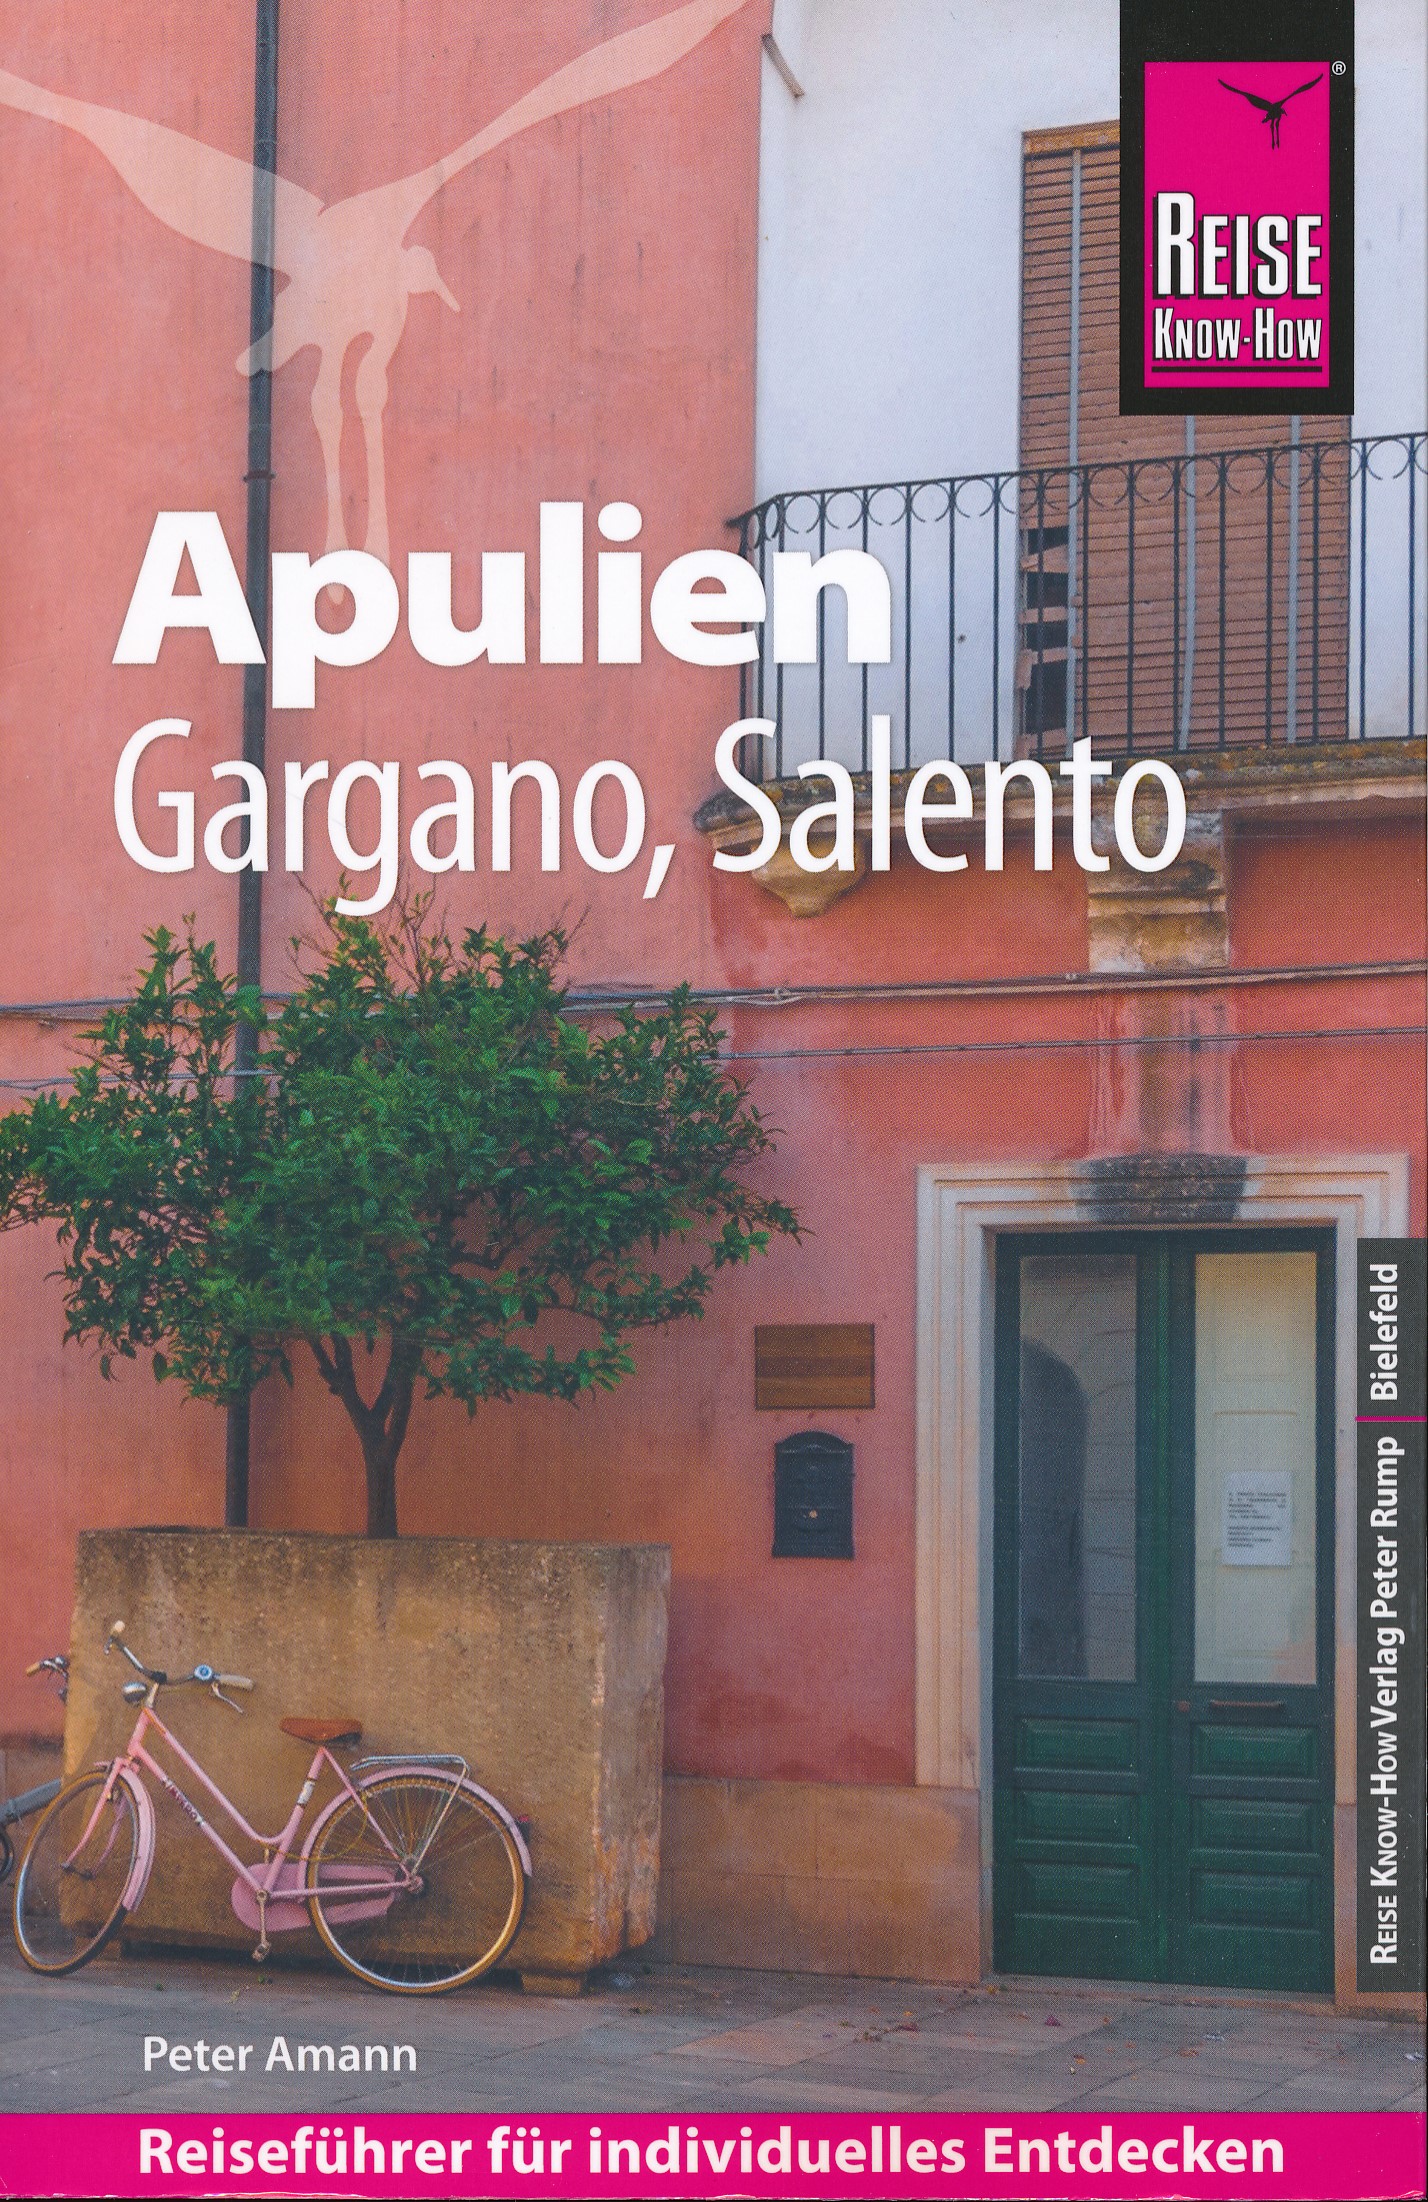 Reisgids Apulien - Gargano, Salento - Puglia | Reise Know-How Verlag de zwerver